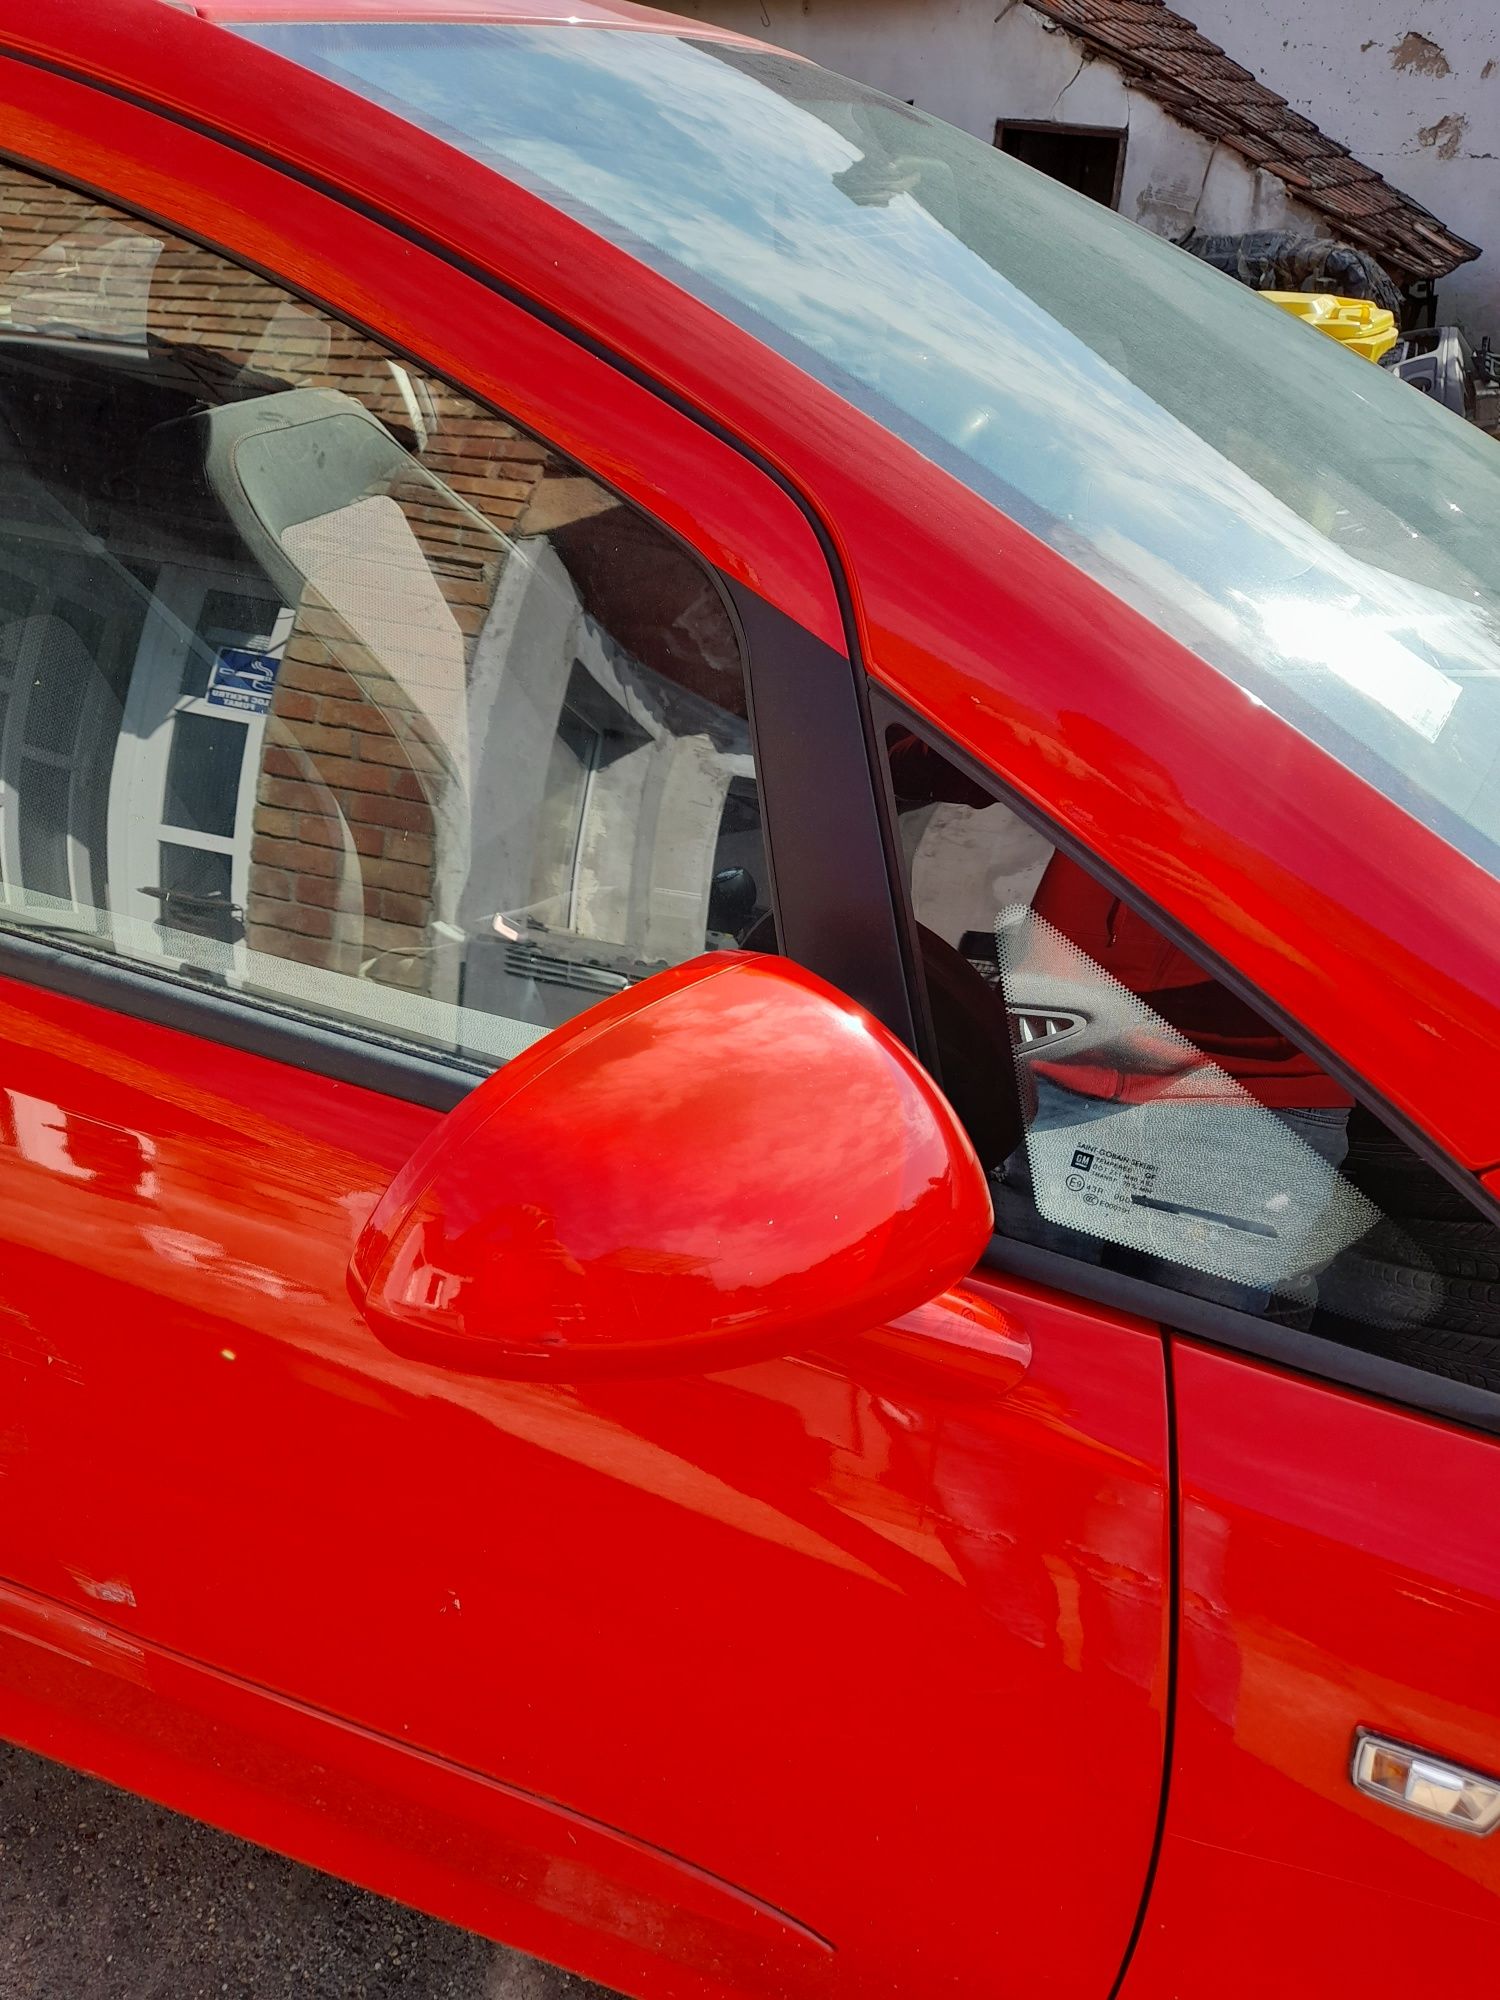 Oglinda stanga/dreapta Opel Corsa D ( 2 usi ) cod Z547 rosu